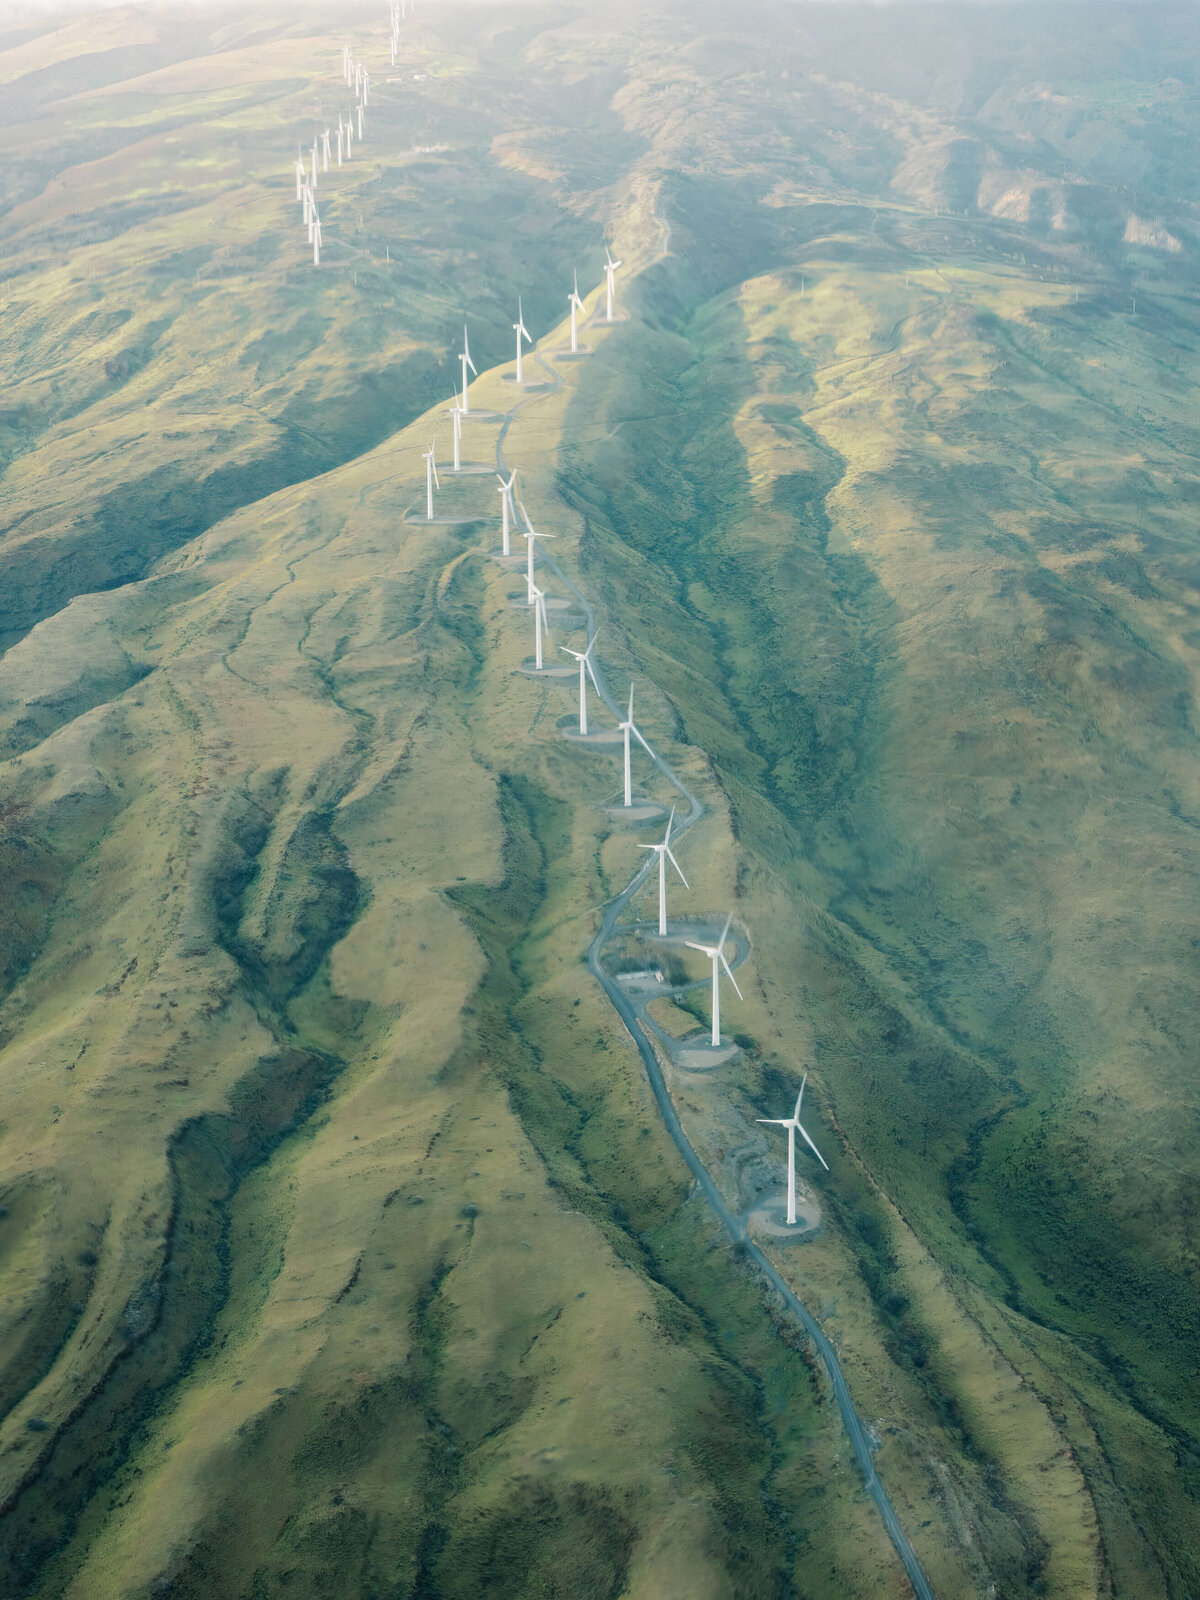 065-Maui Windmills Travel Photography